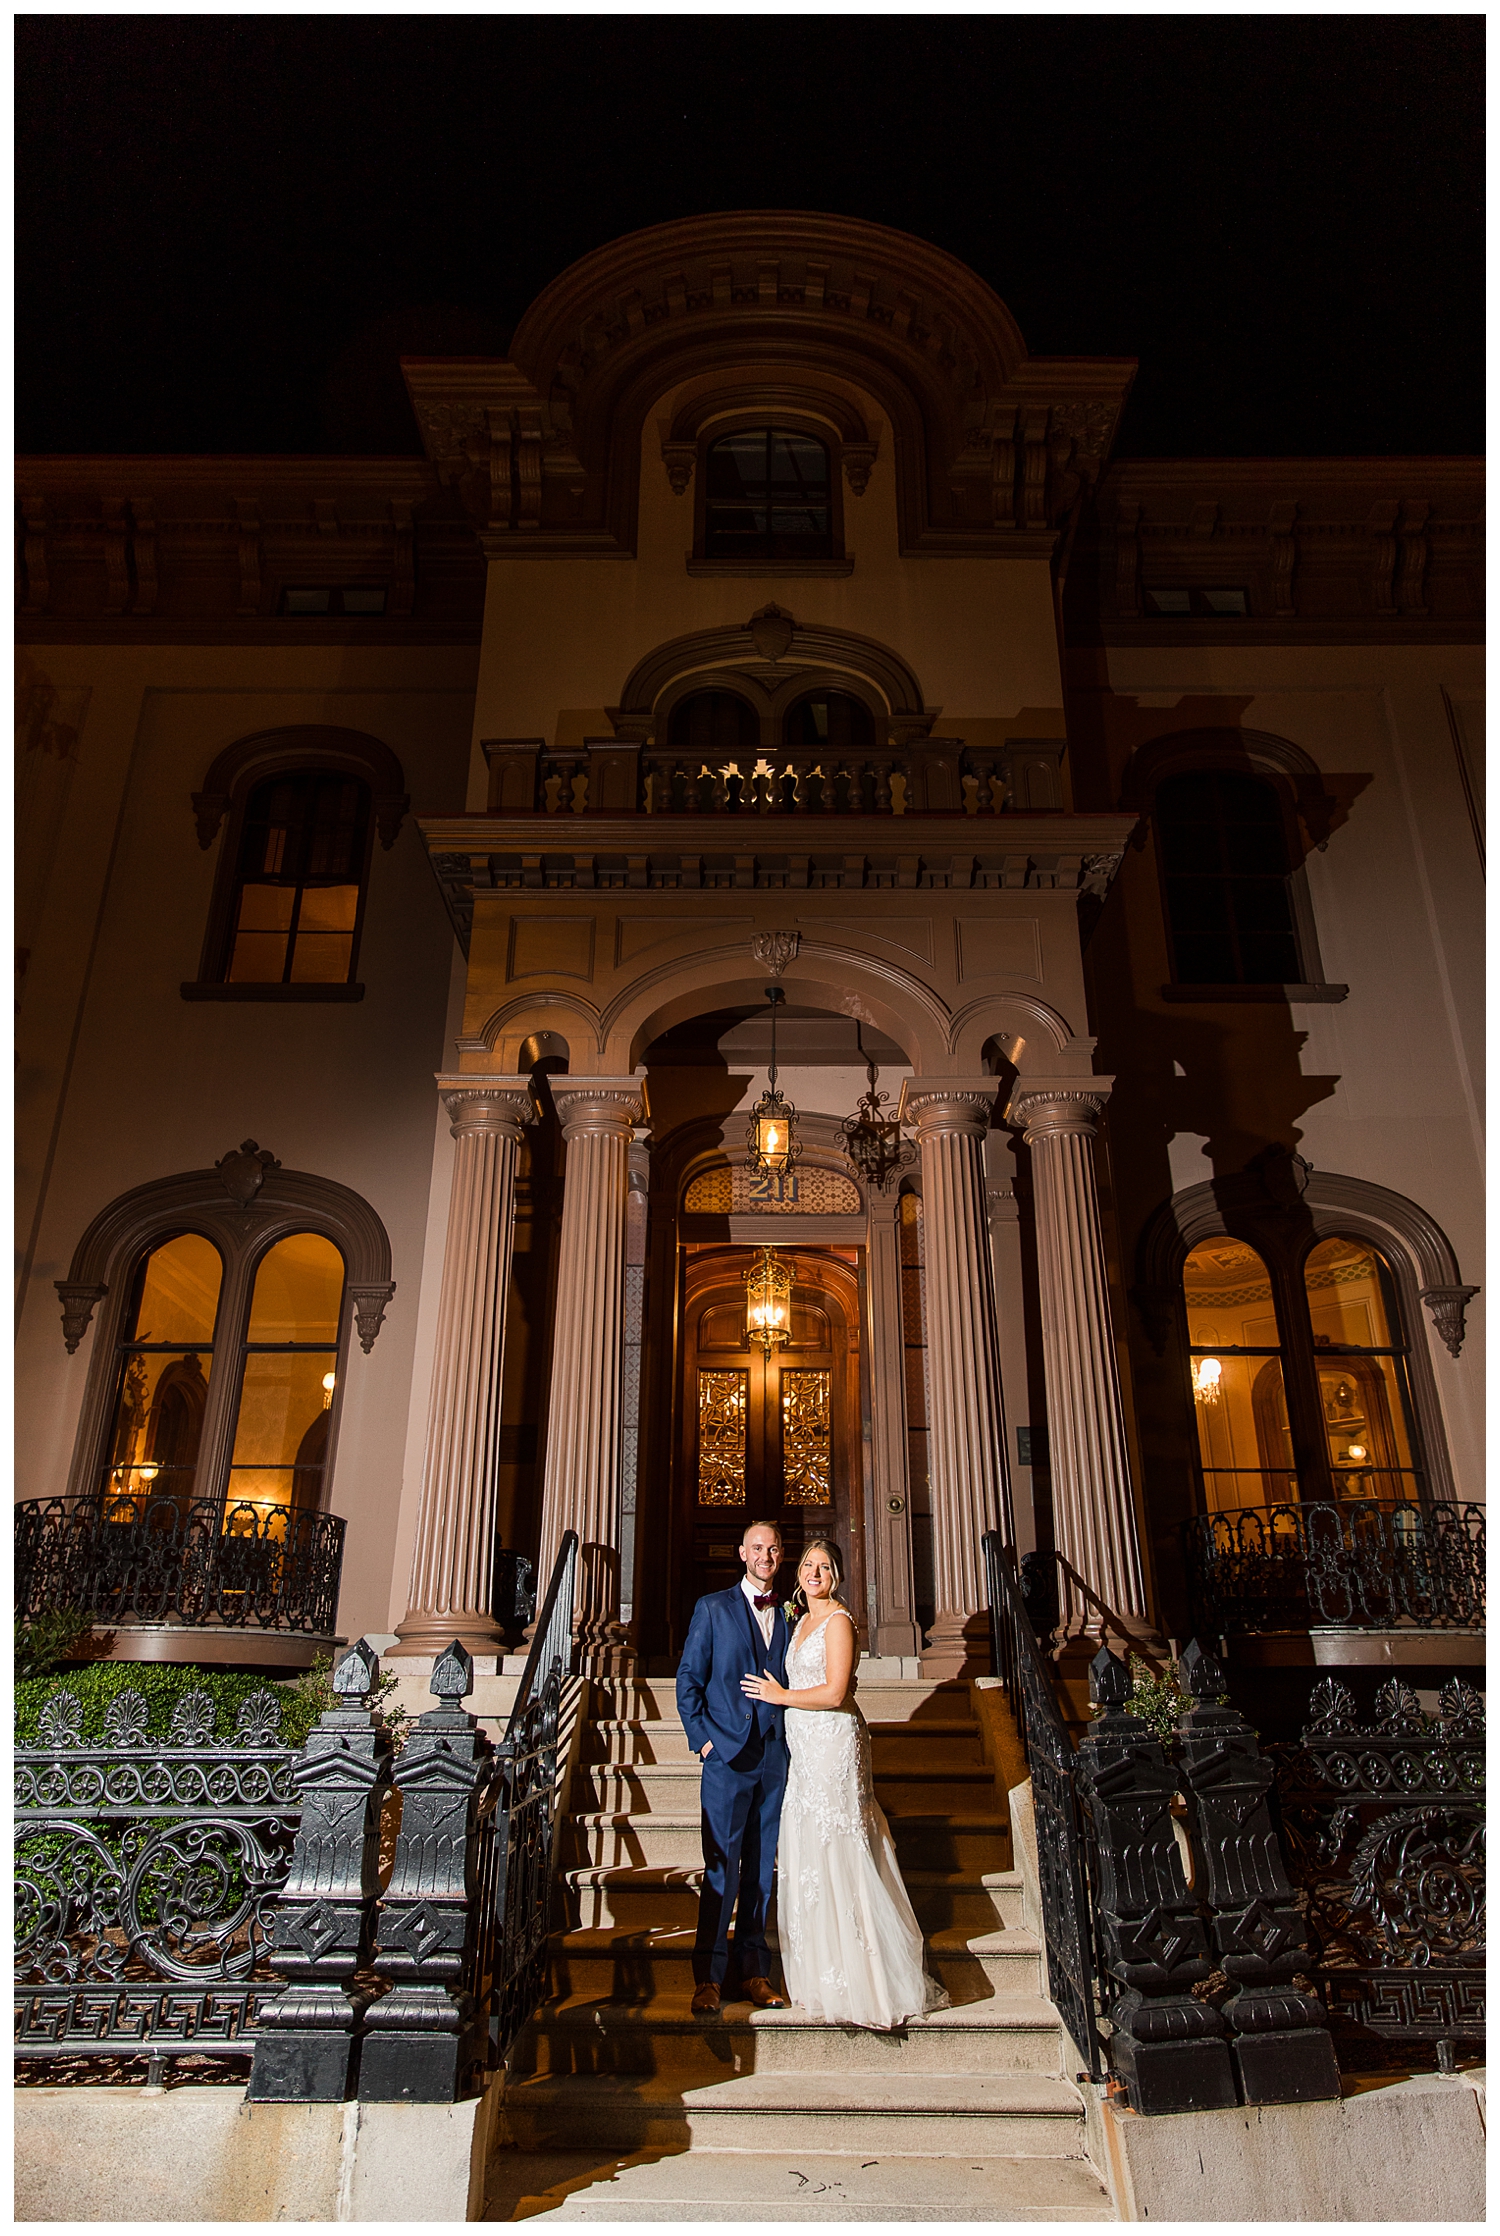 Laura & Chad | Bolling Haxall House Richmond Virginia Wedding